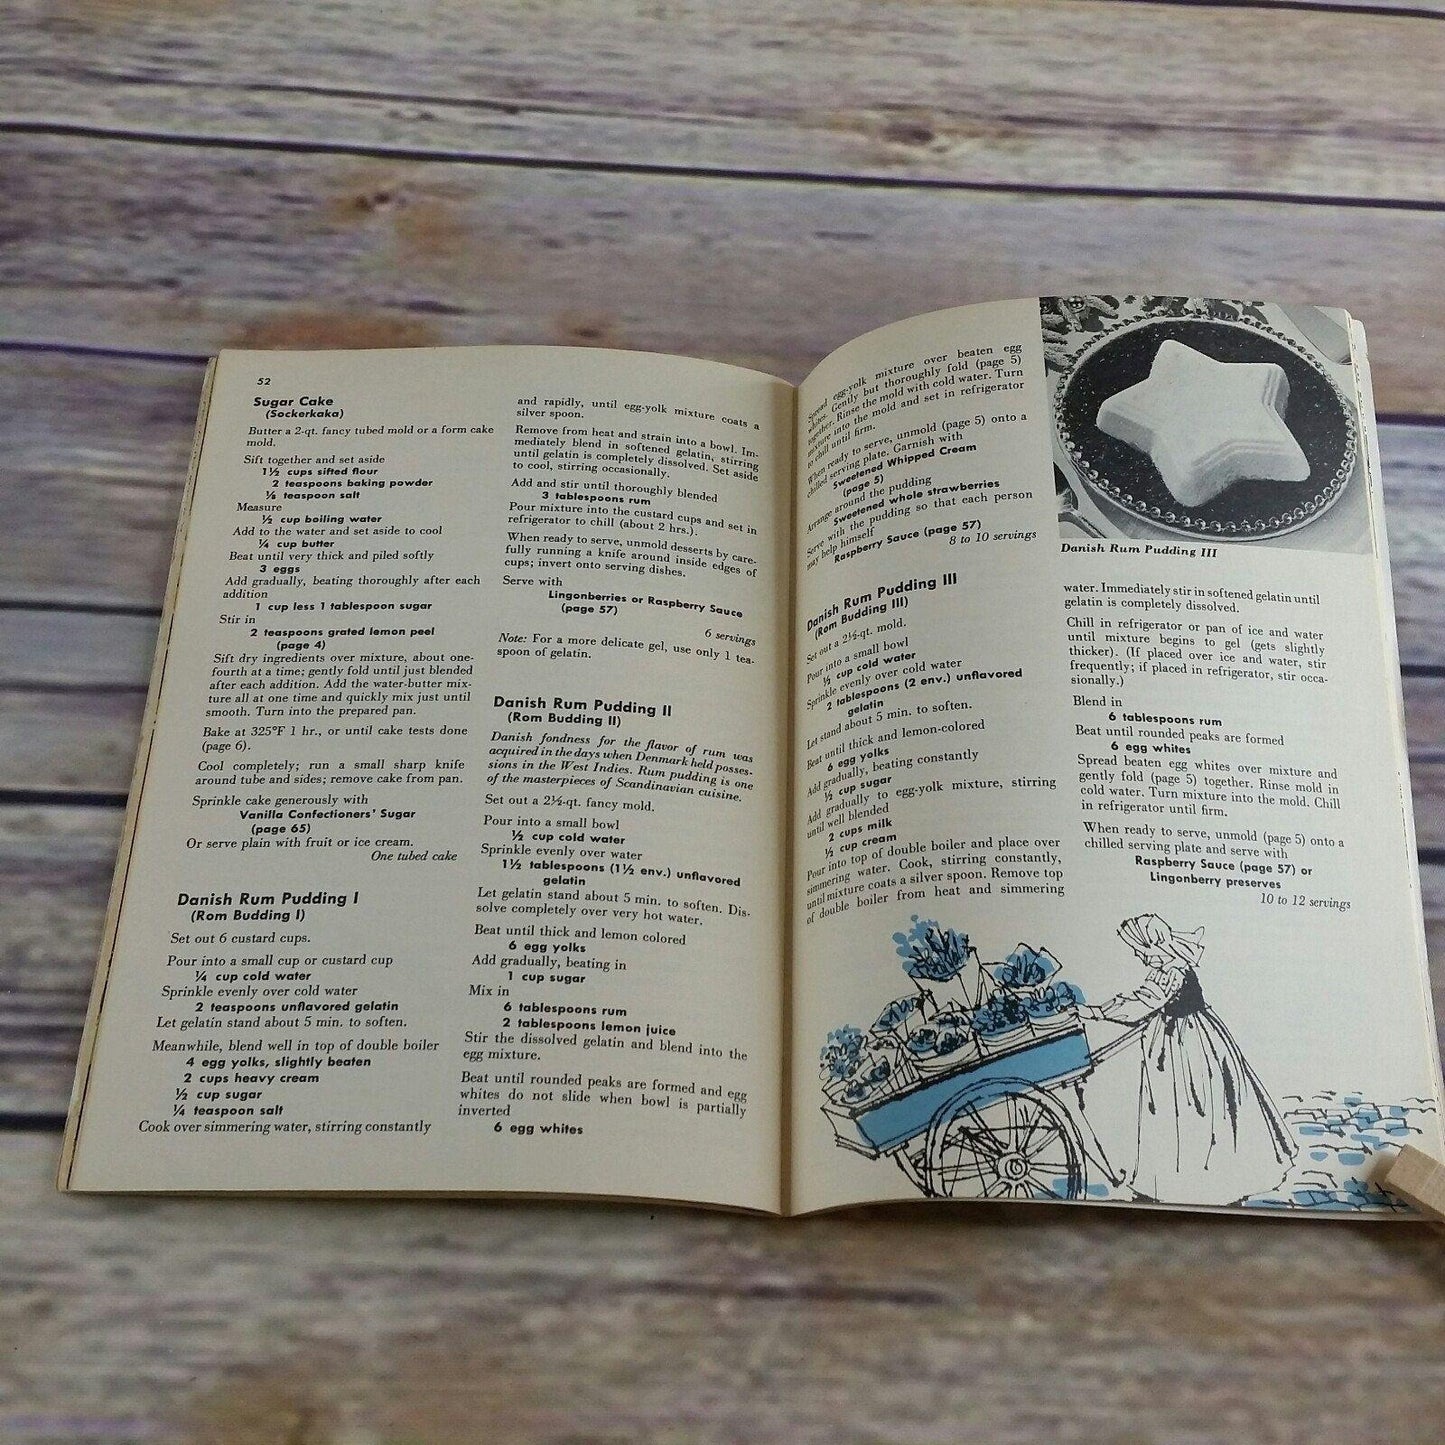 Vtg Scandinavian Cookbook Culinary Arts No 113 Norwegian Swedish and Danish Recipes 1956 Paperback Booklet